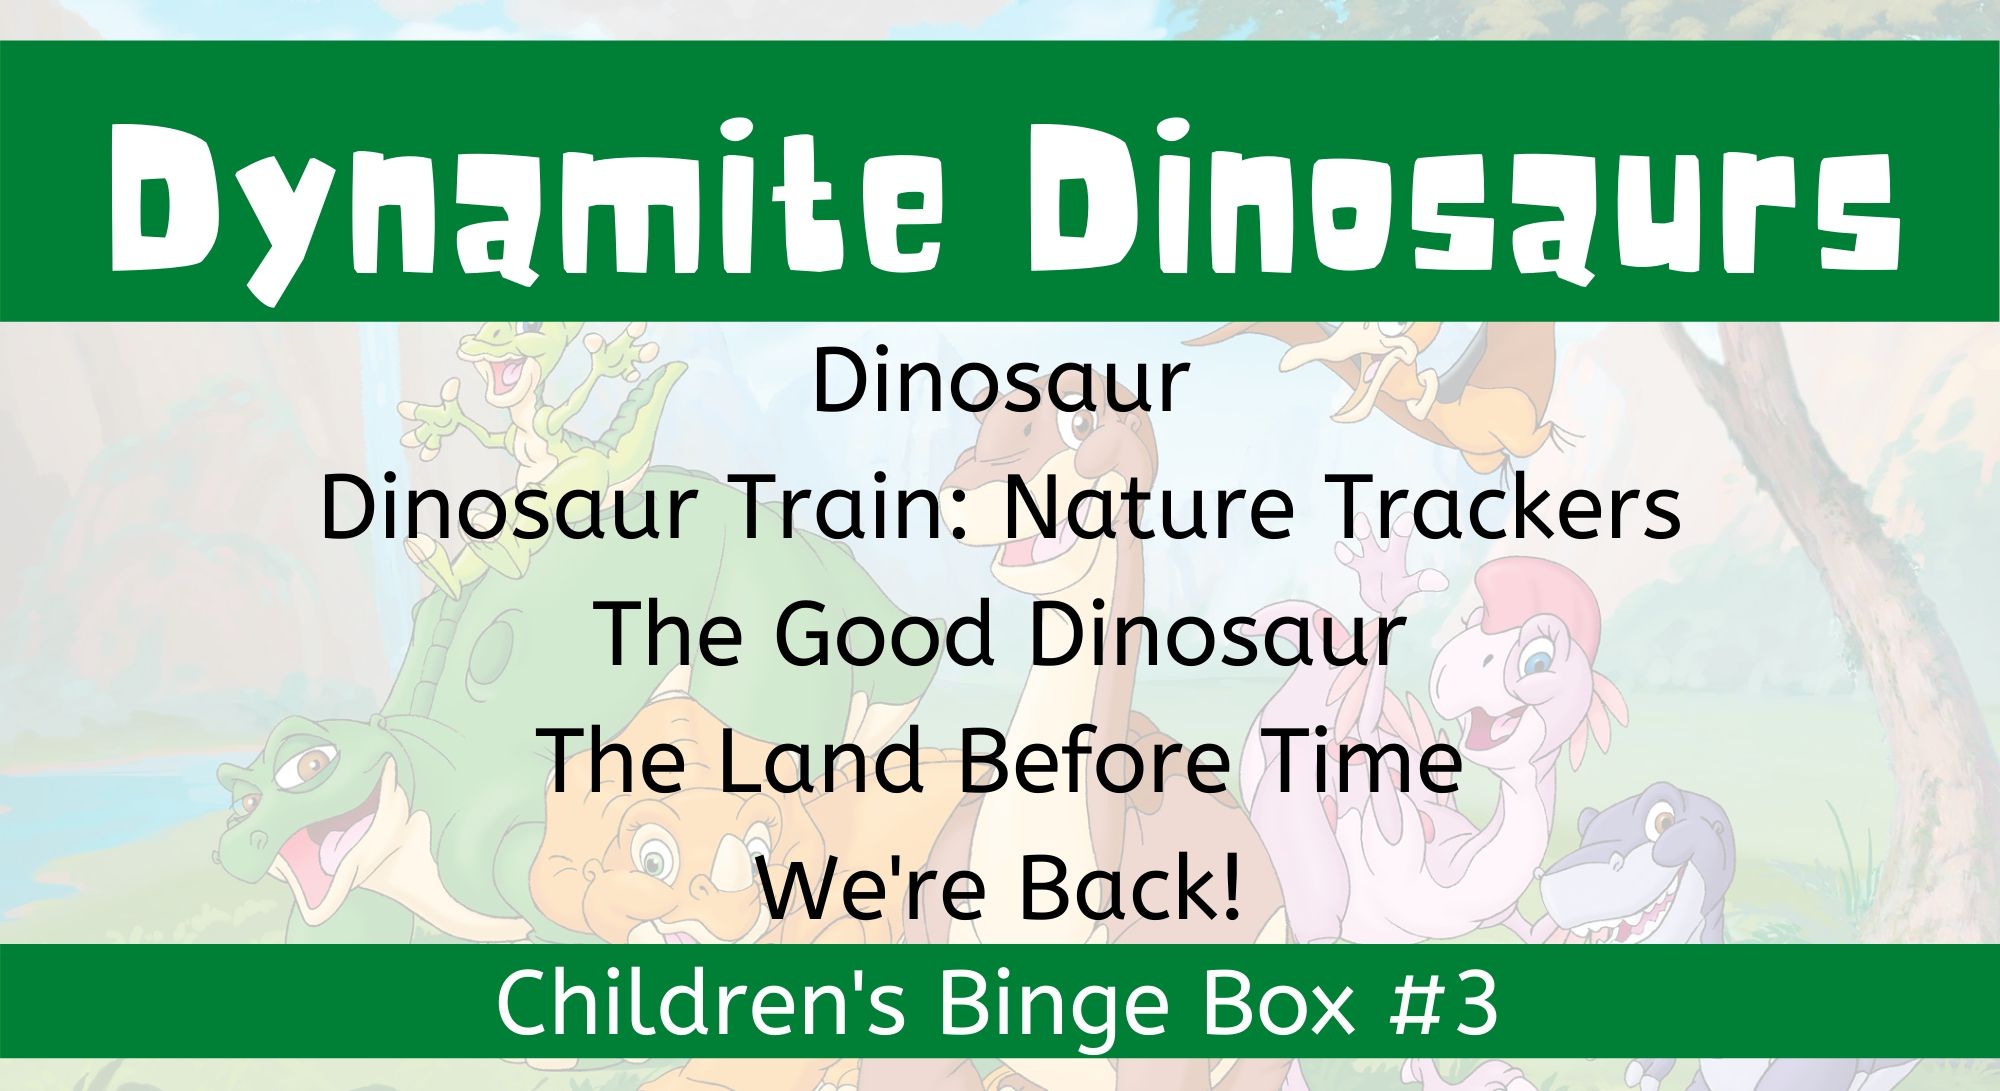 Dynamite Dinosaurs Children's Binge Box